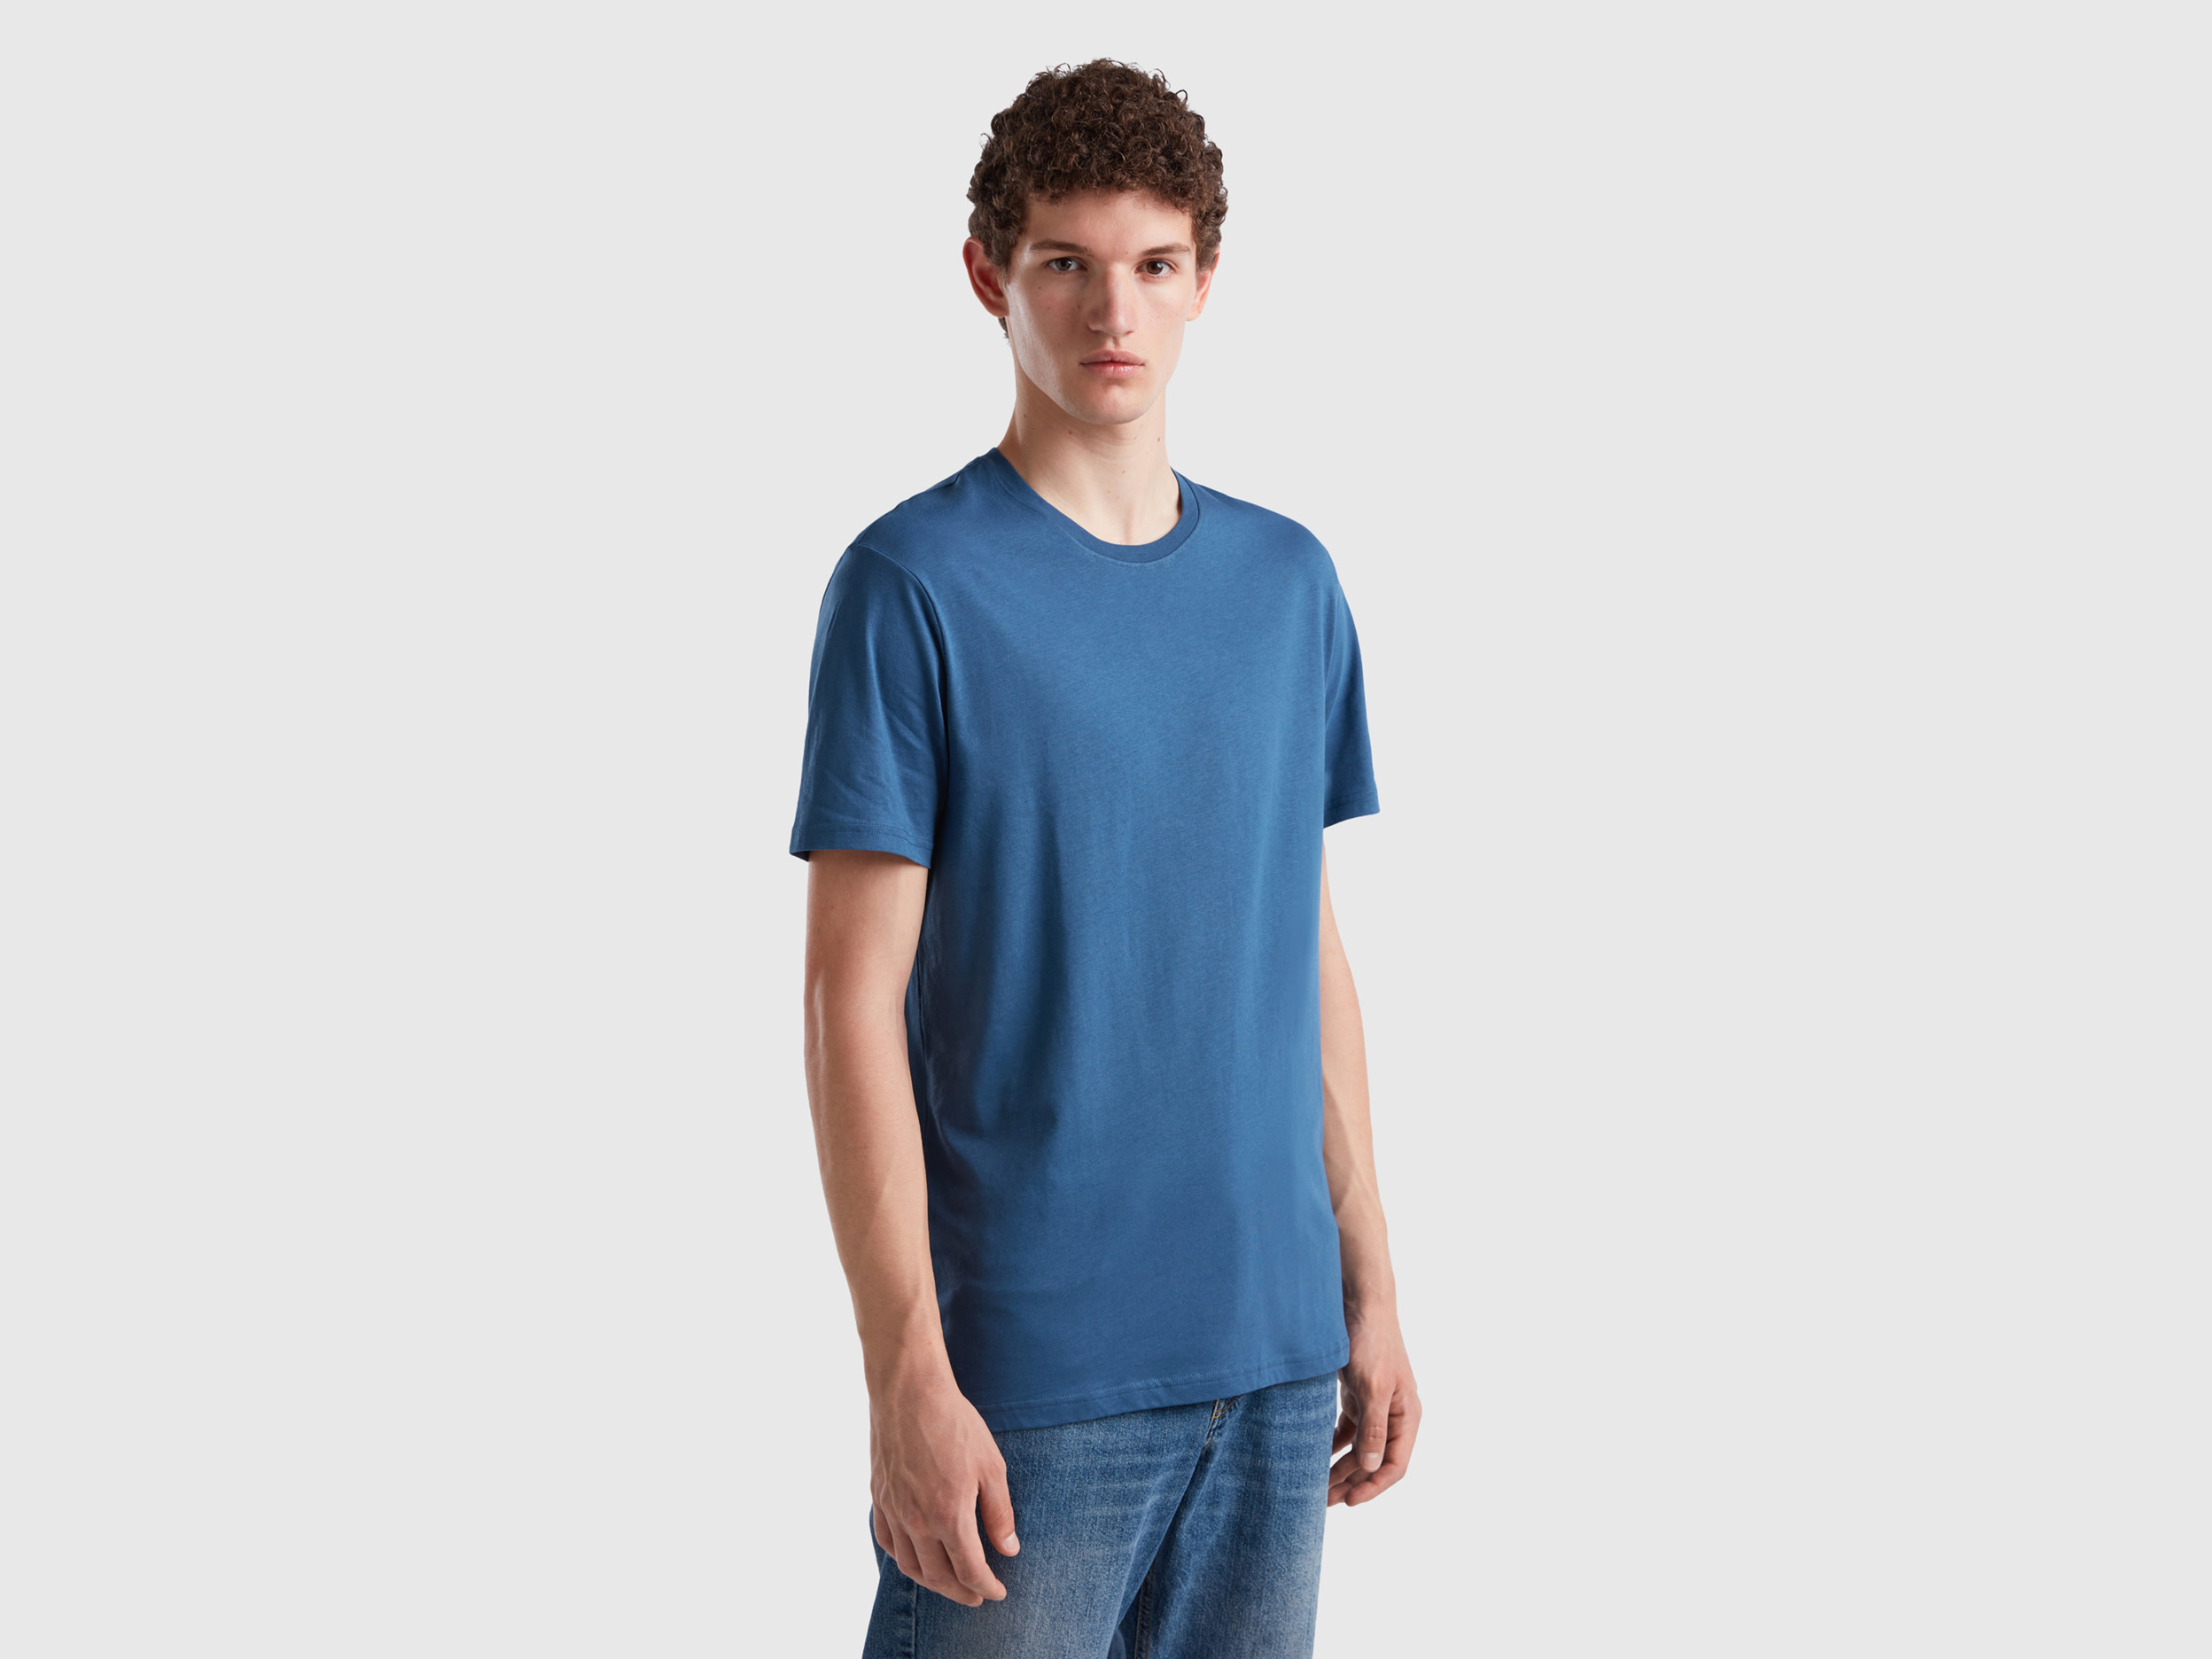 Benetton, Air Force Blue T-shirt, size L, Air Force Blue, Men